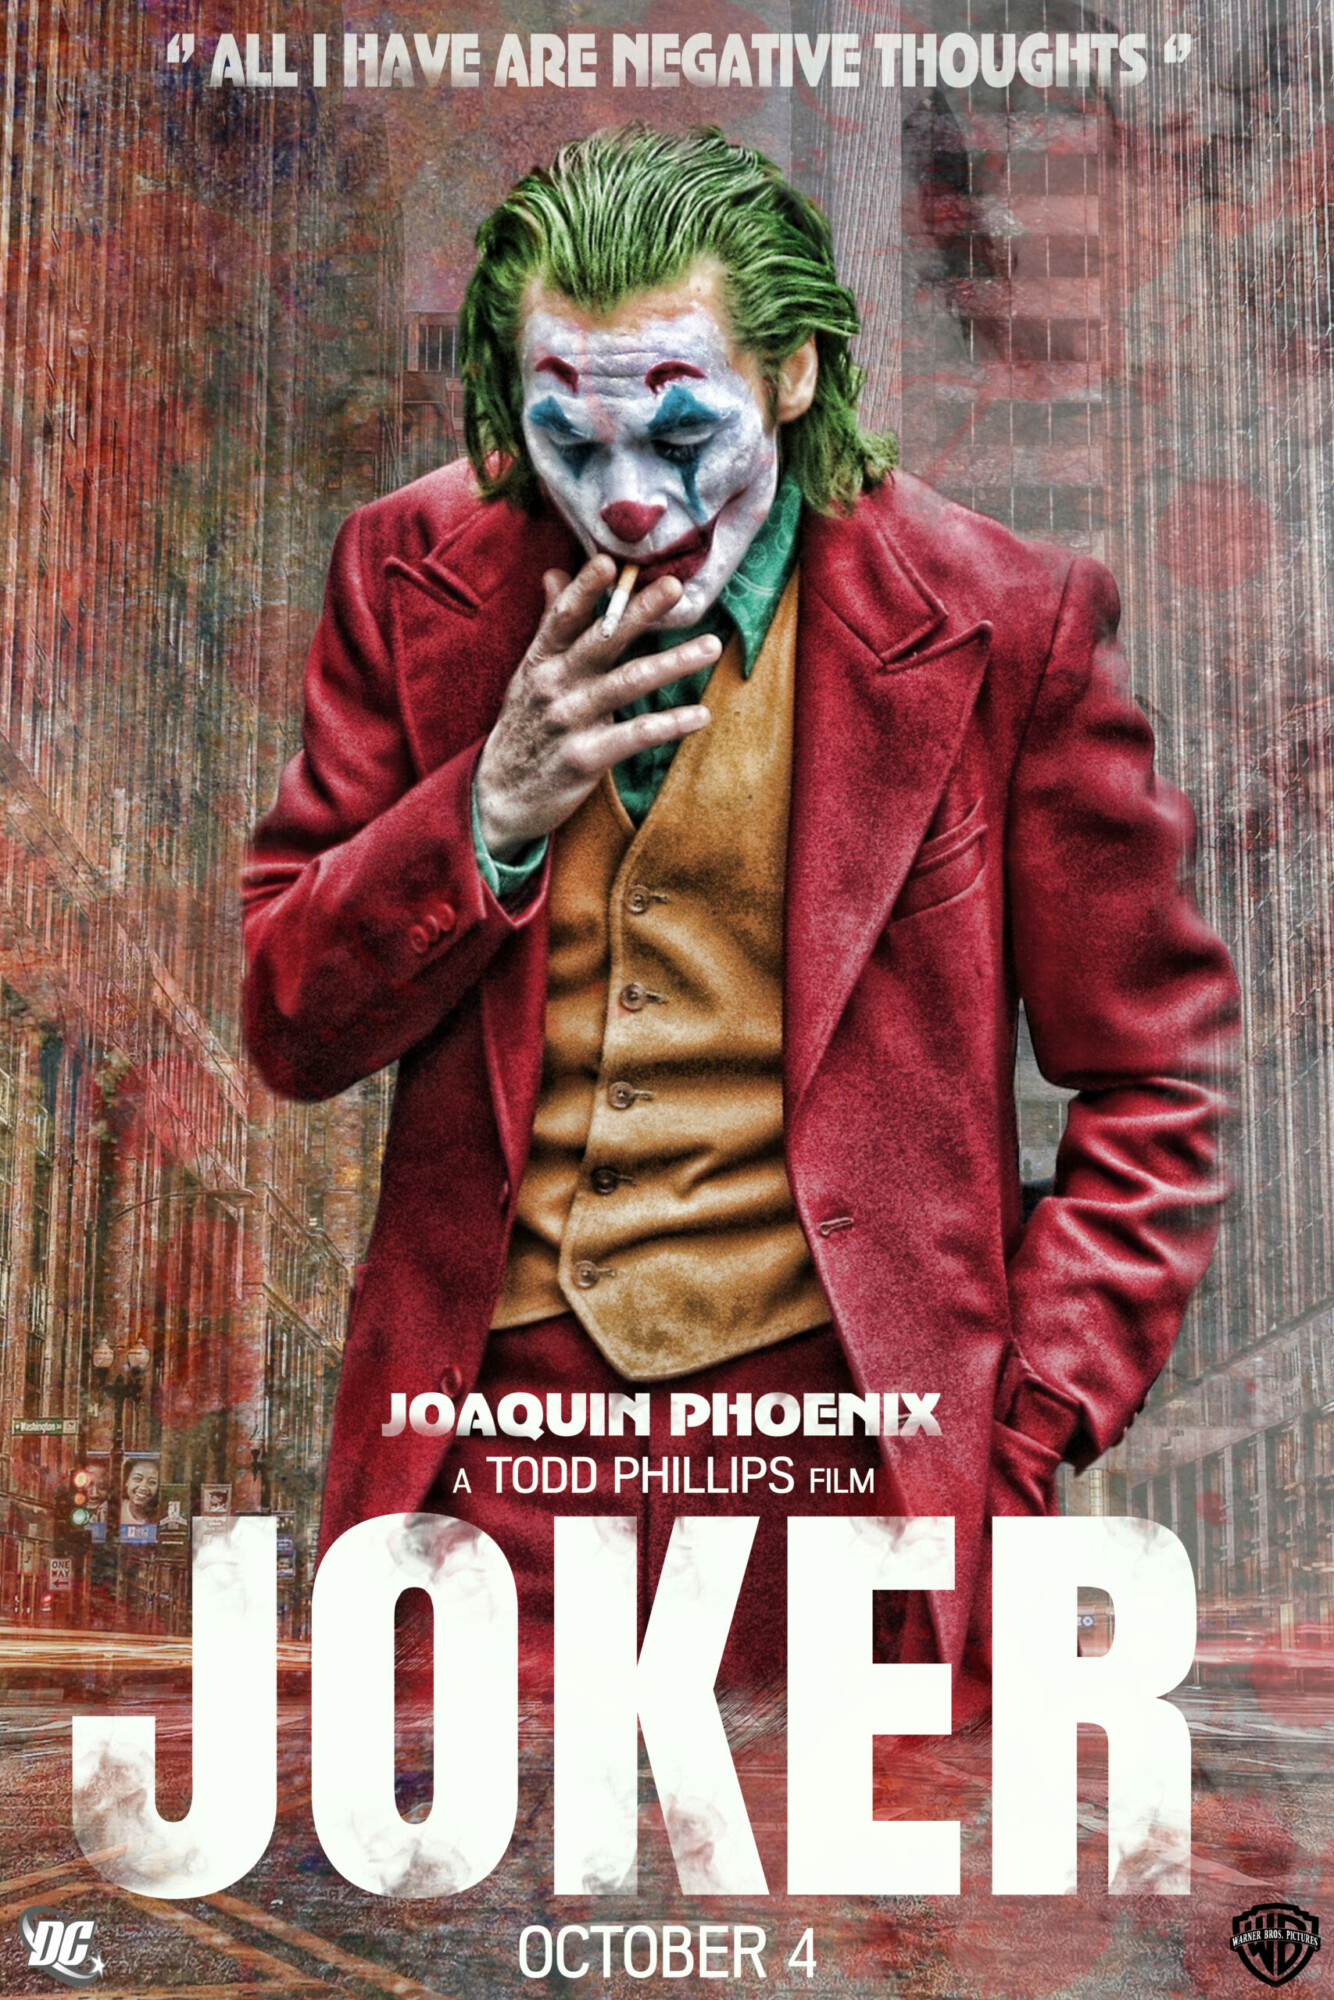 Milliard Wow servitrice The Joker | PosterSpy